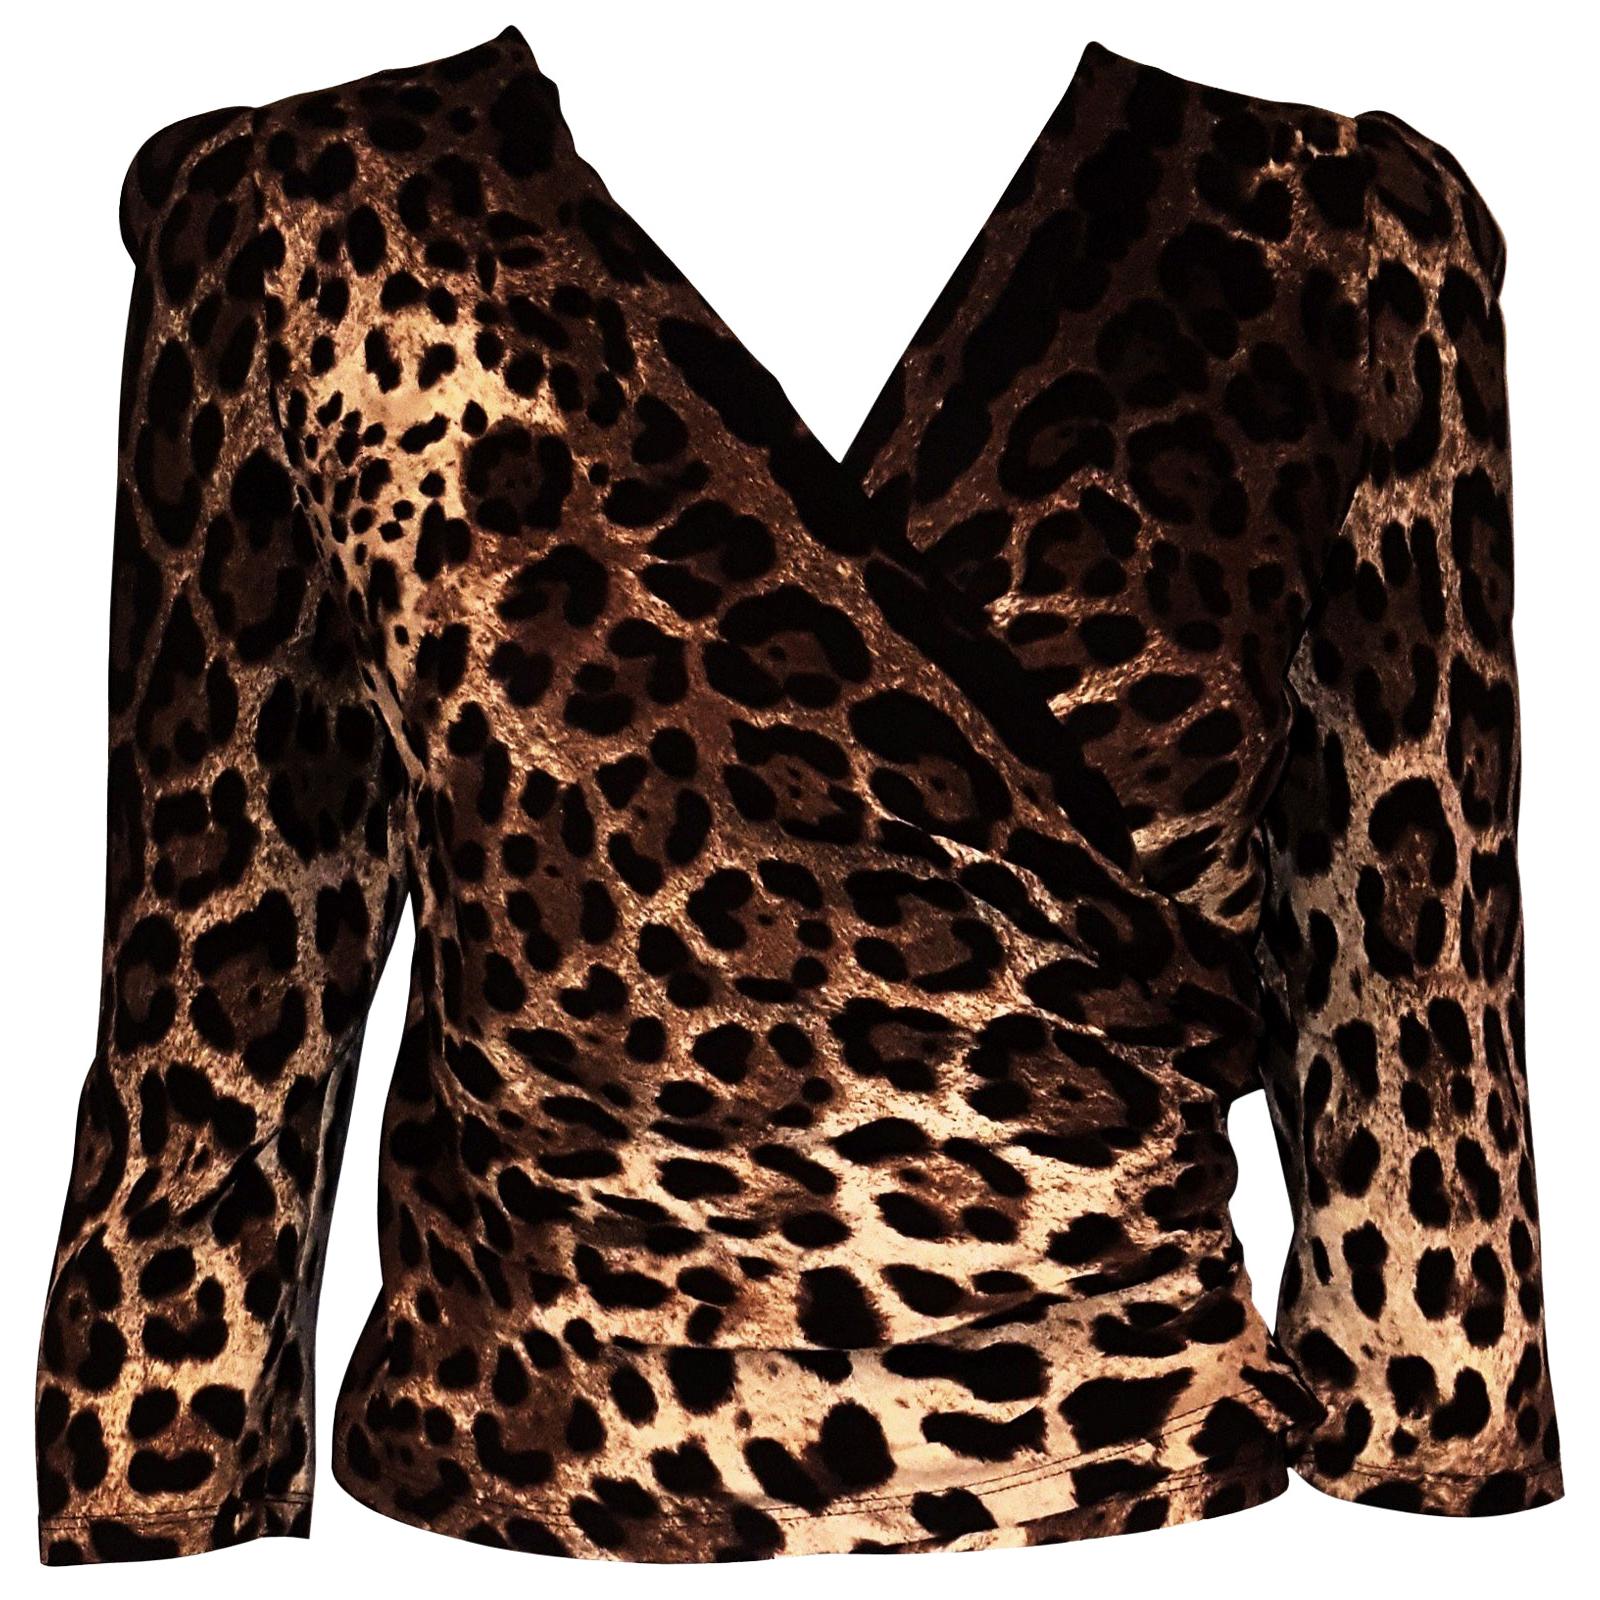 Dolce & Gabbana Silk Leopard Print in Brown & Beige Hues Wrap Blouse 46 EU For Sale